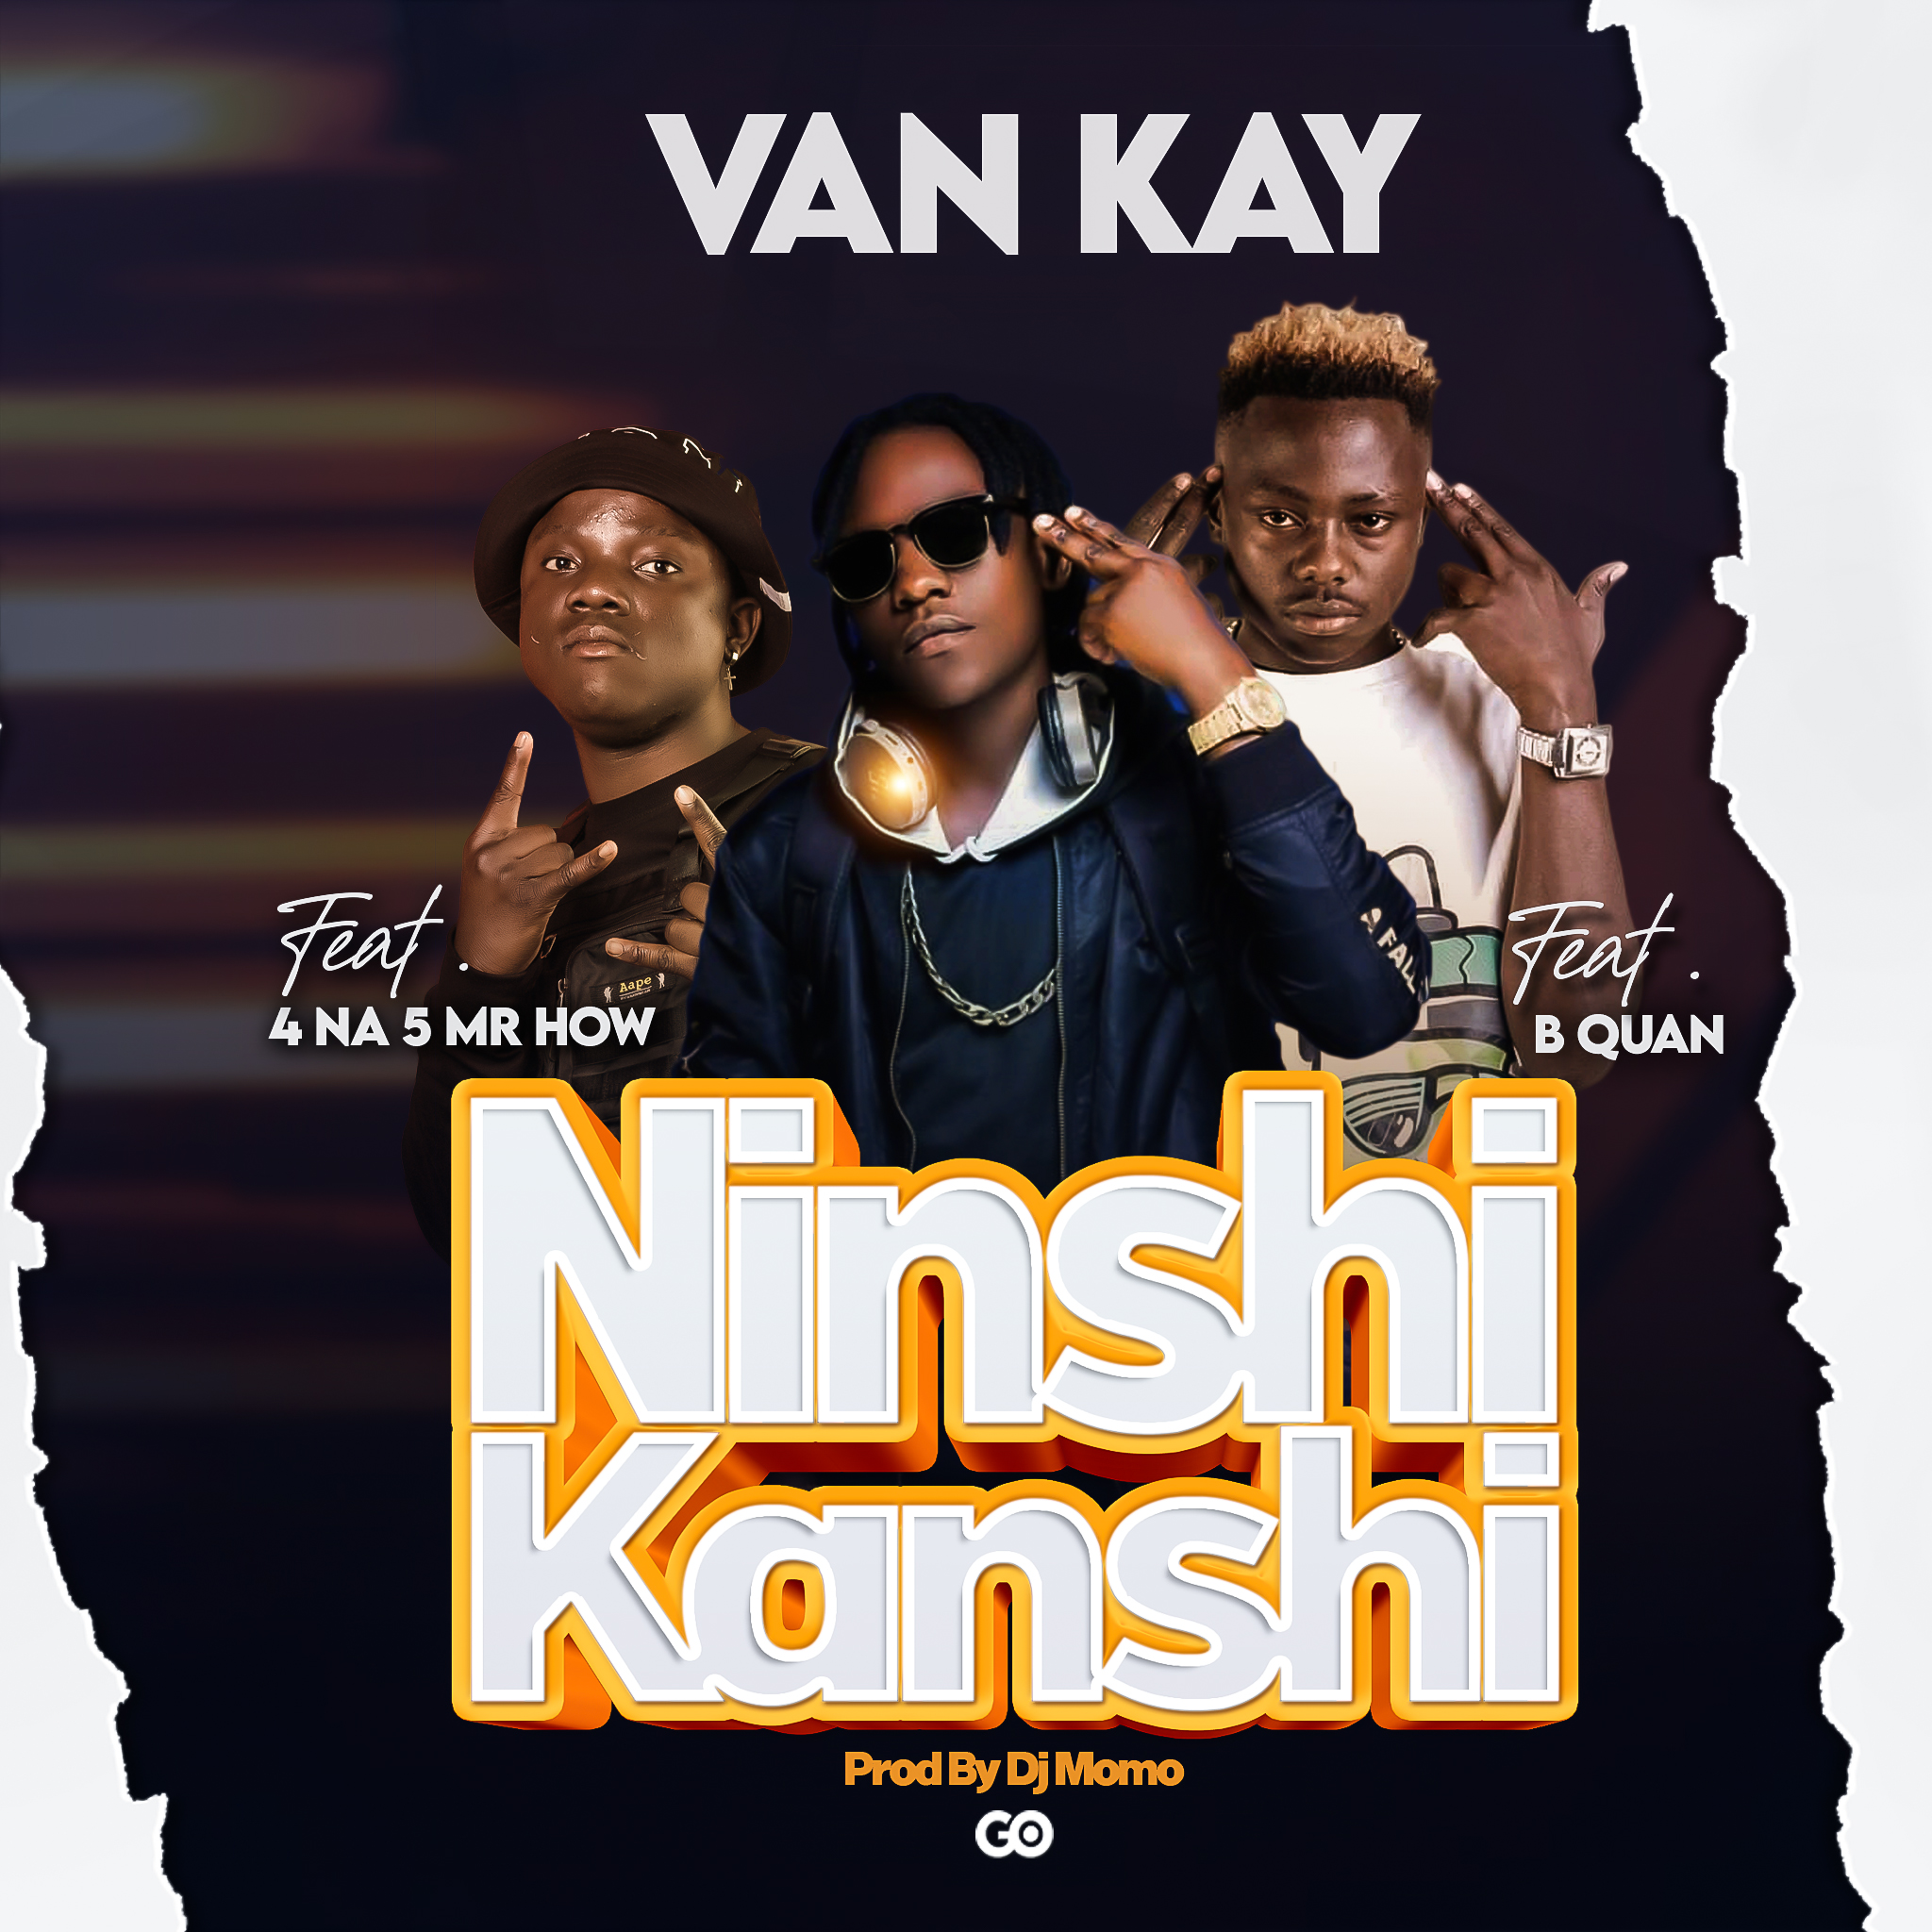 Van Kay ft. B Quan & 4 Na 5 (Mr How) - Ninshi Kanshi Mp3 Download